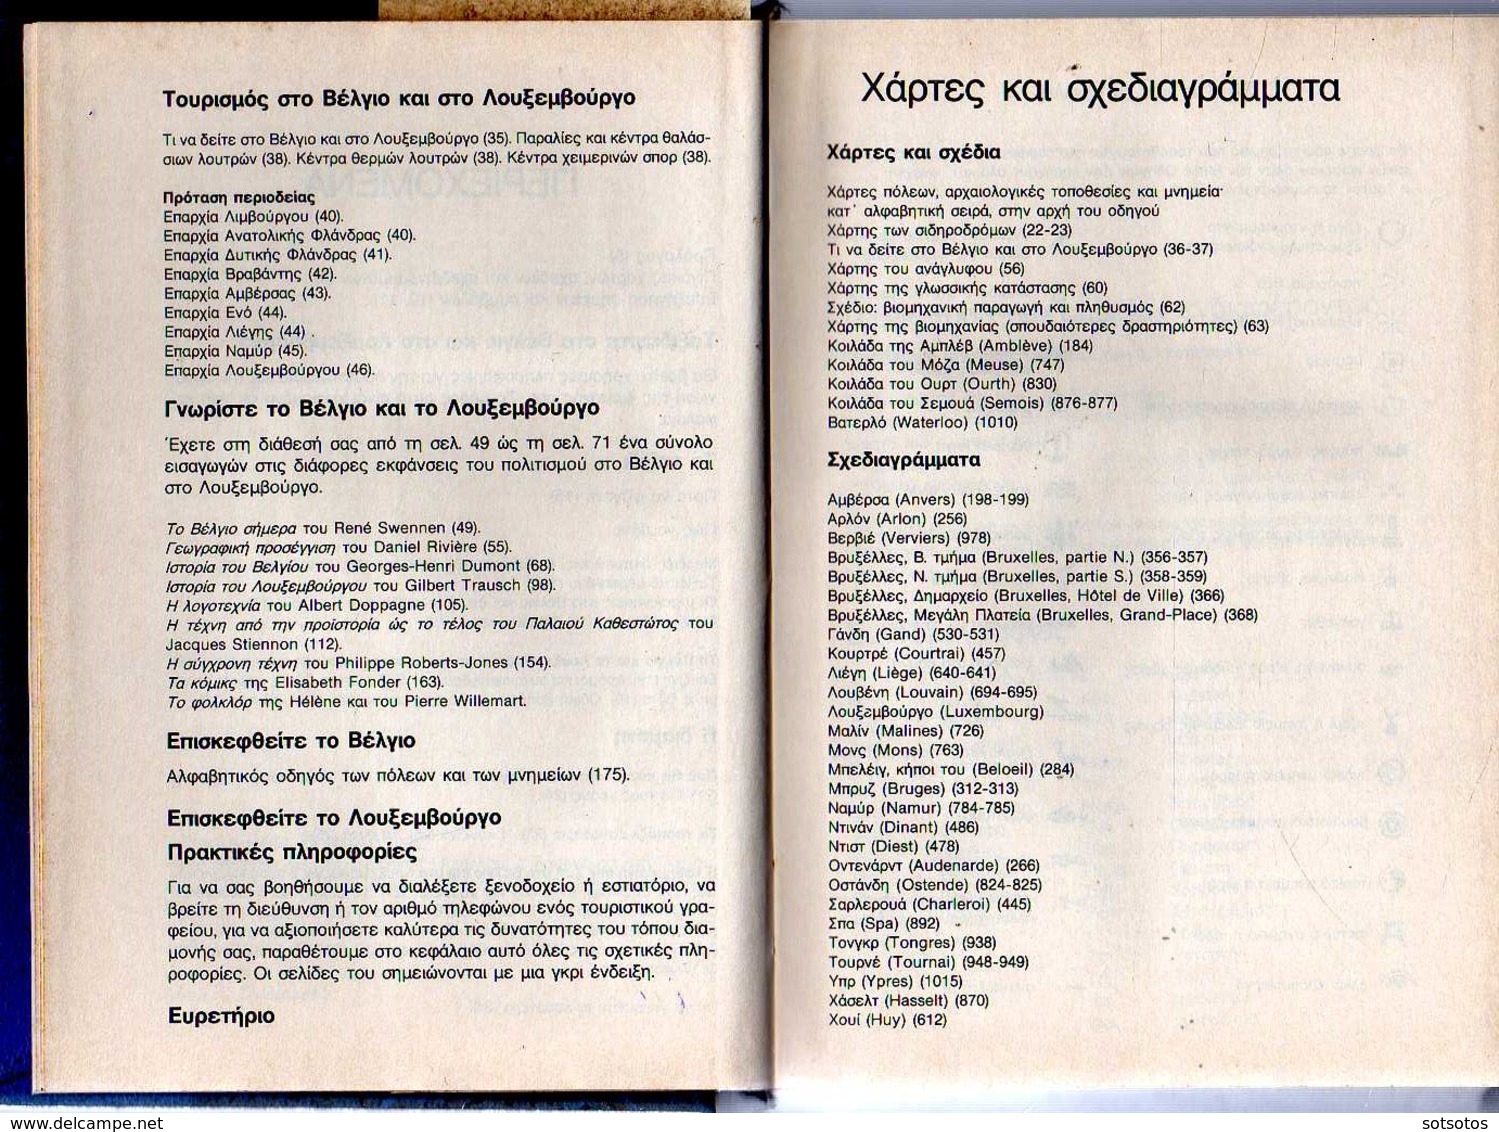 GREEK BOOK: ΒΕΛΓΙΟ - ΛΟΥΞΕΜΒΟΥΡΓΟ,  οι ΜΠΛΕ ΟΔΗΓΟΙ, ΤΟΥΡΙΣΤΙΚΟΣ ΟΔΗΓΟΣ στα ΕΛΛΗΝΙΚΑ, 1243 ΣΕΛΙΔΕΣ (1992) ΣΕ ΑΡΙΣΤΗ ΚΑΤΑΣ - Práctico